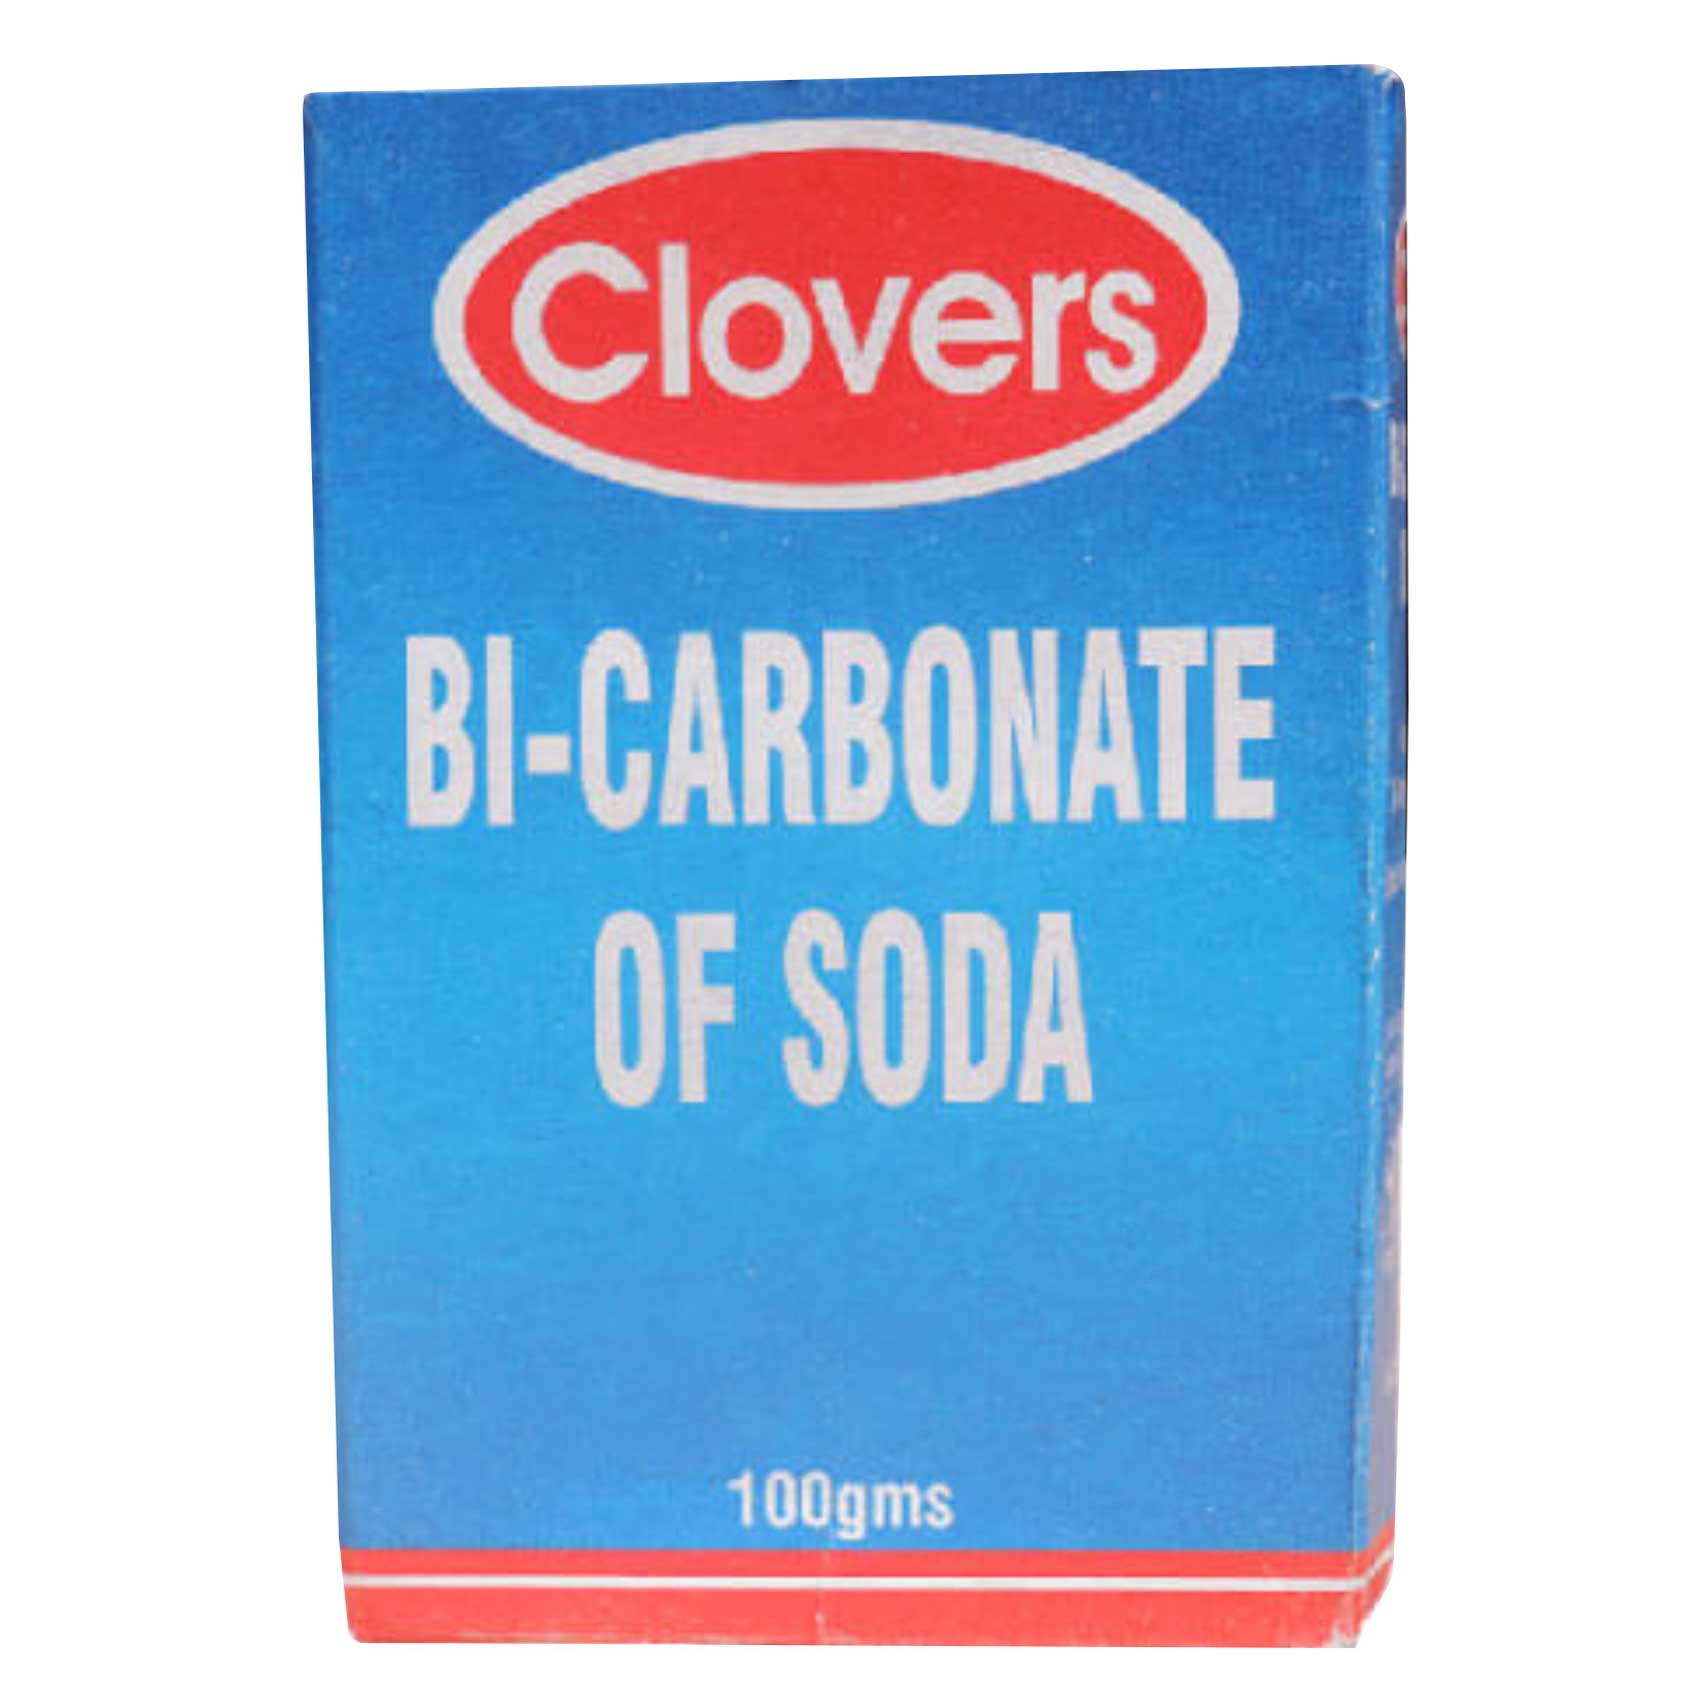 Clovers Bicarbonate Soda 100g